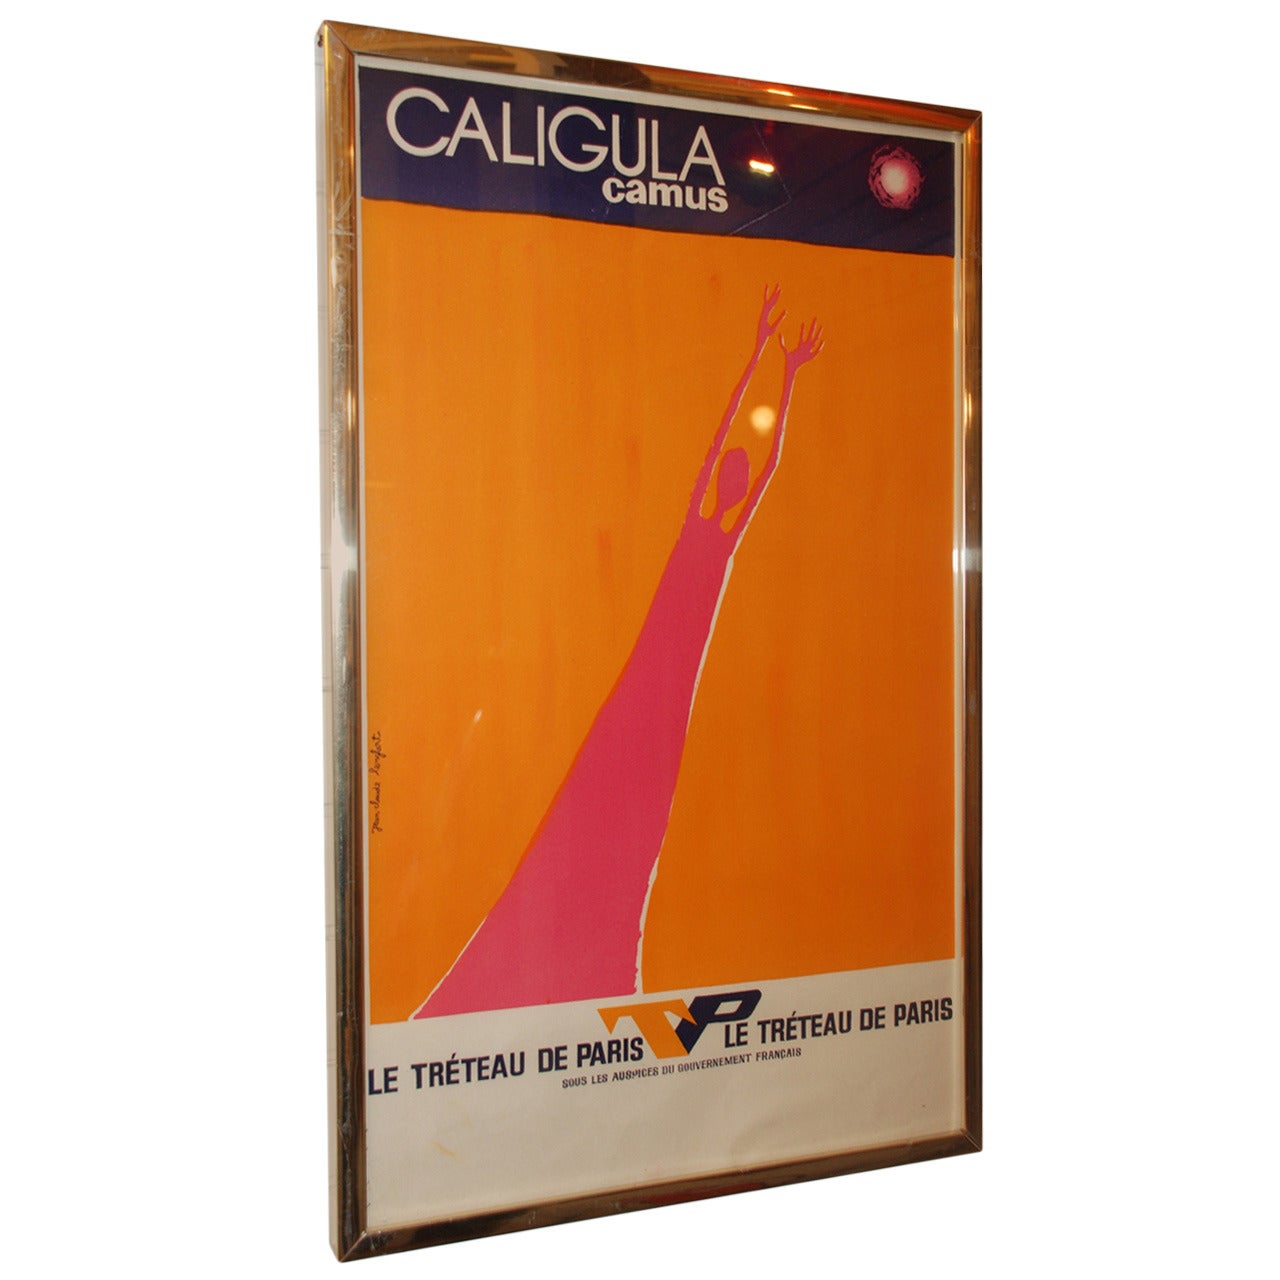 Jean Claude Lenglart "Caligula Camus" French Lithograph For Sale